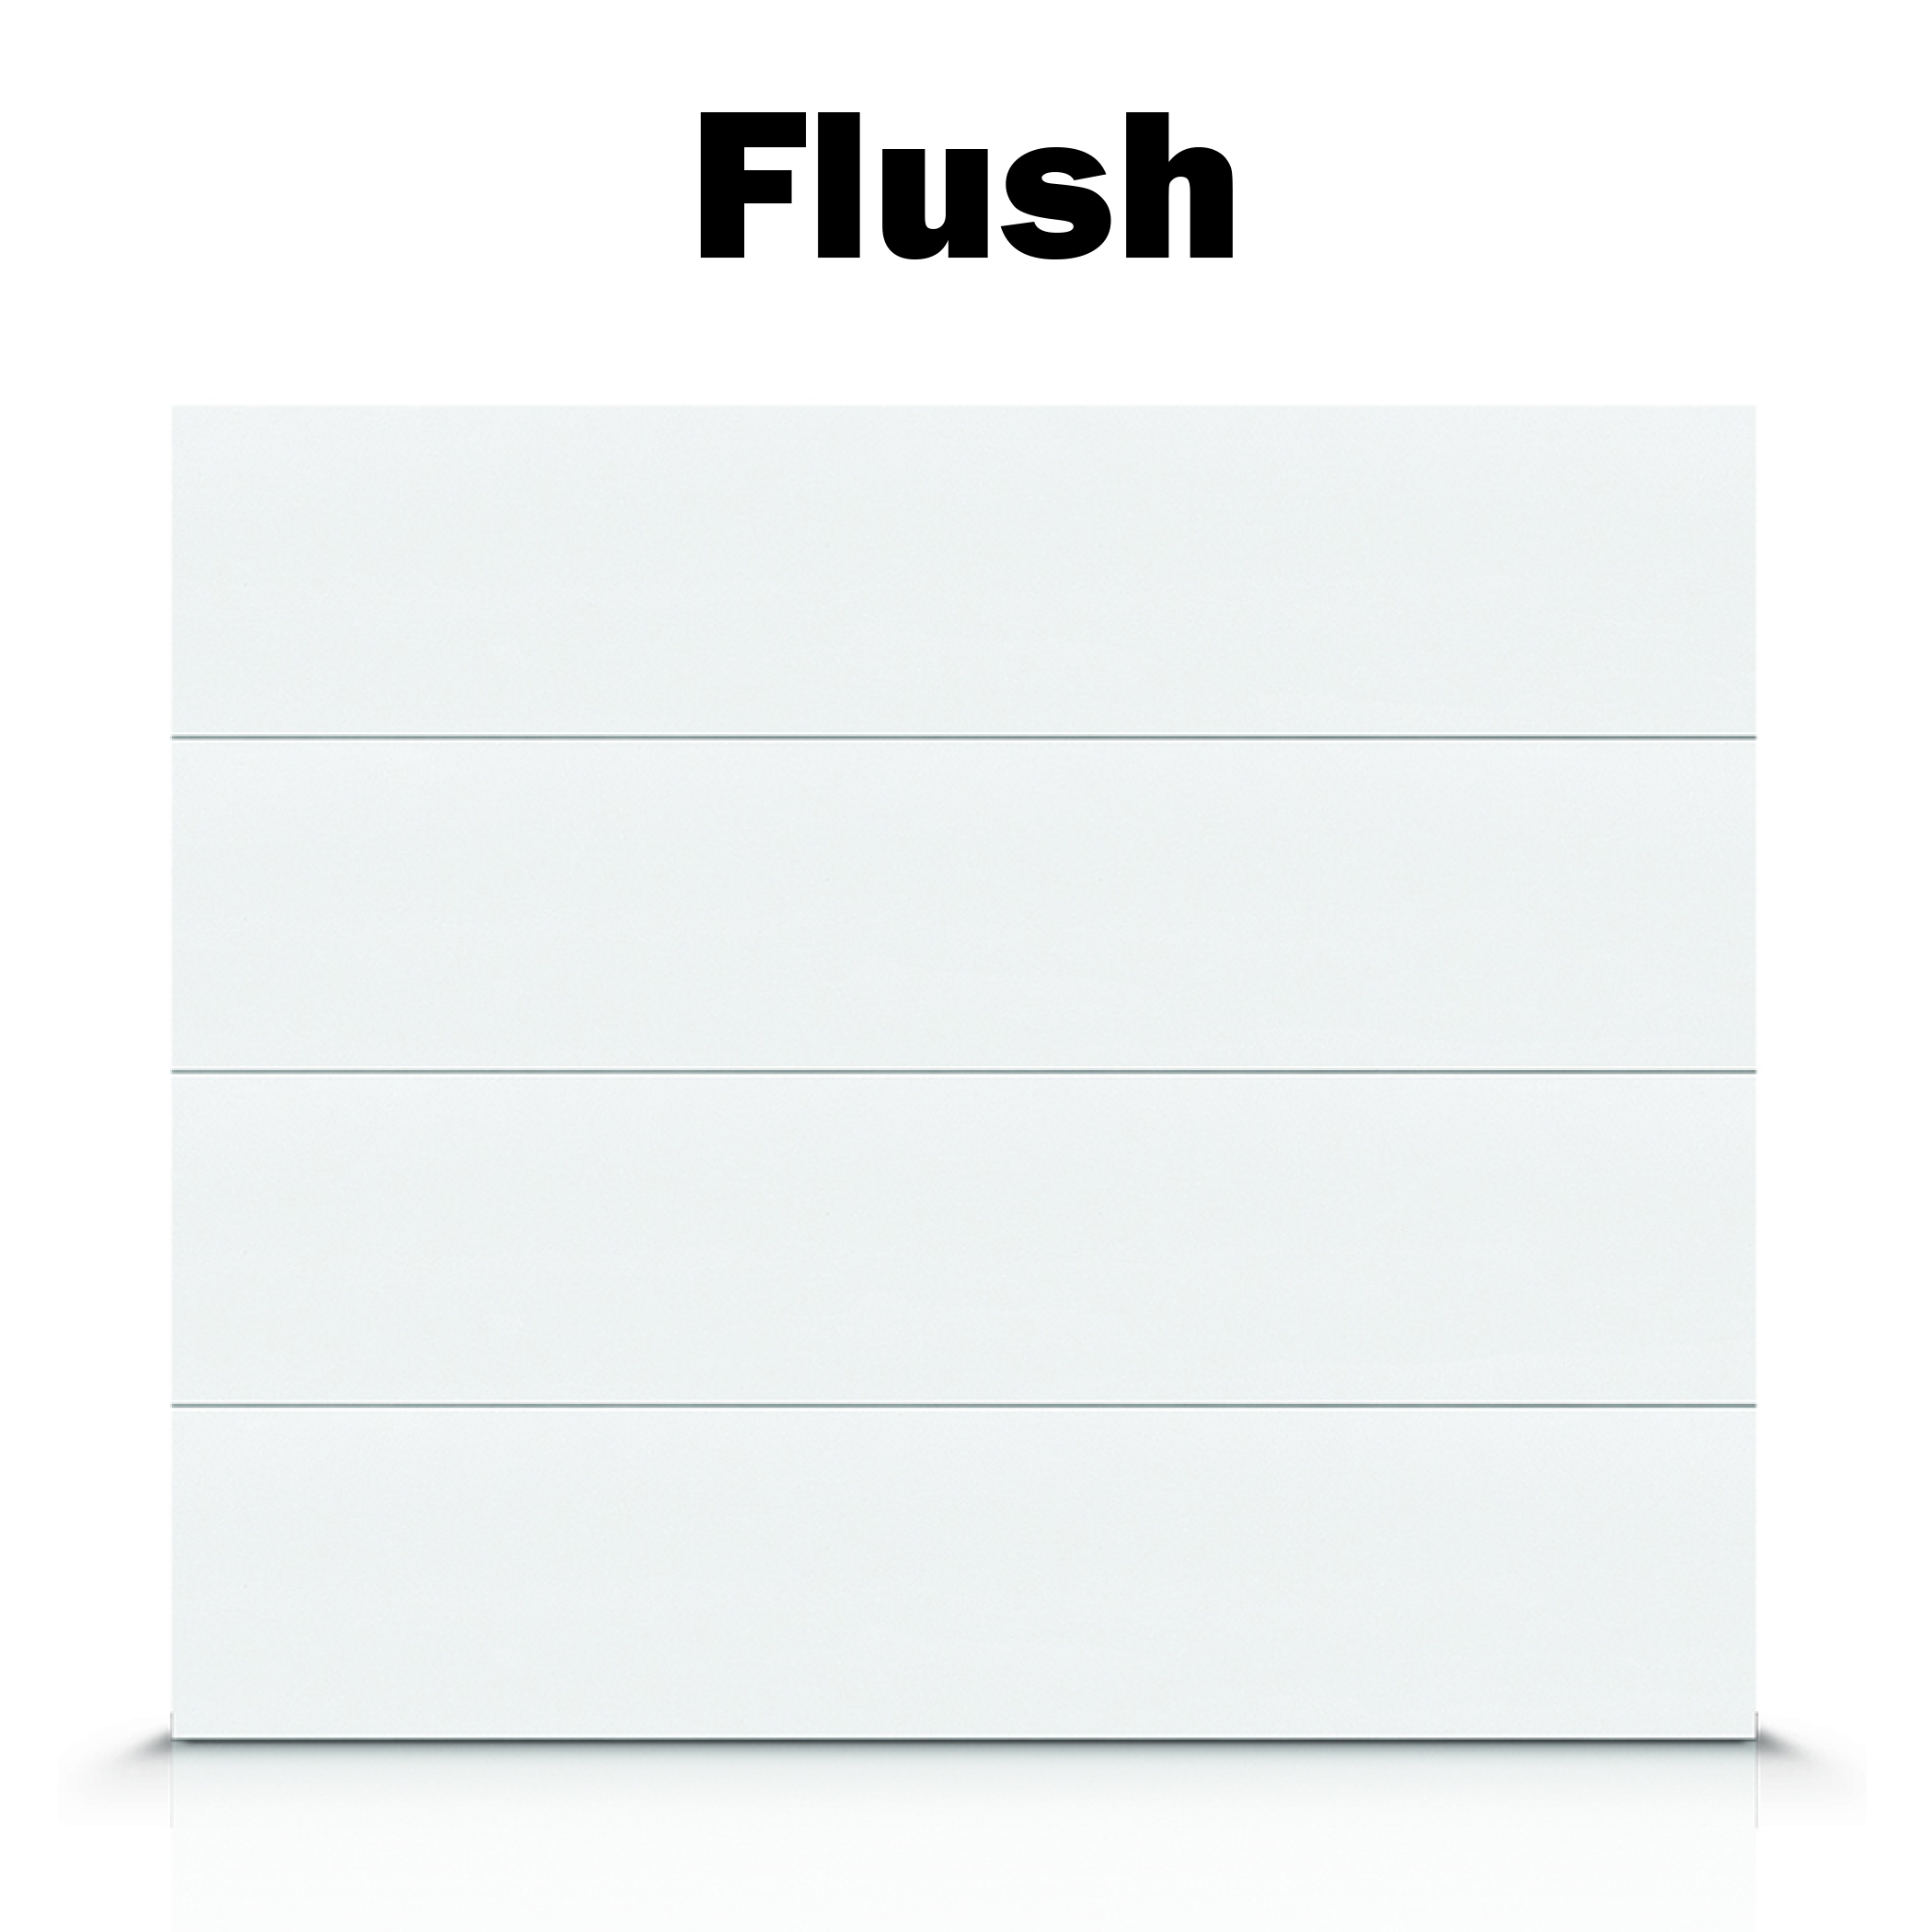 Flush - Classic.jpg